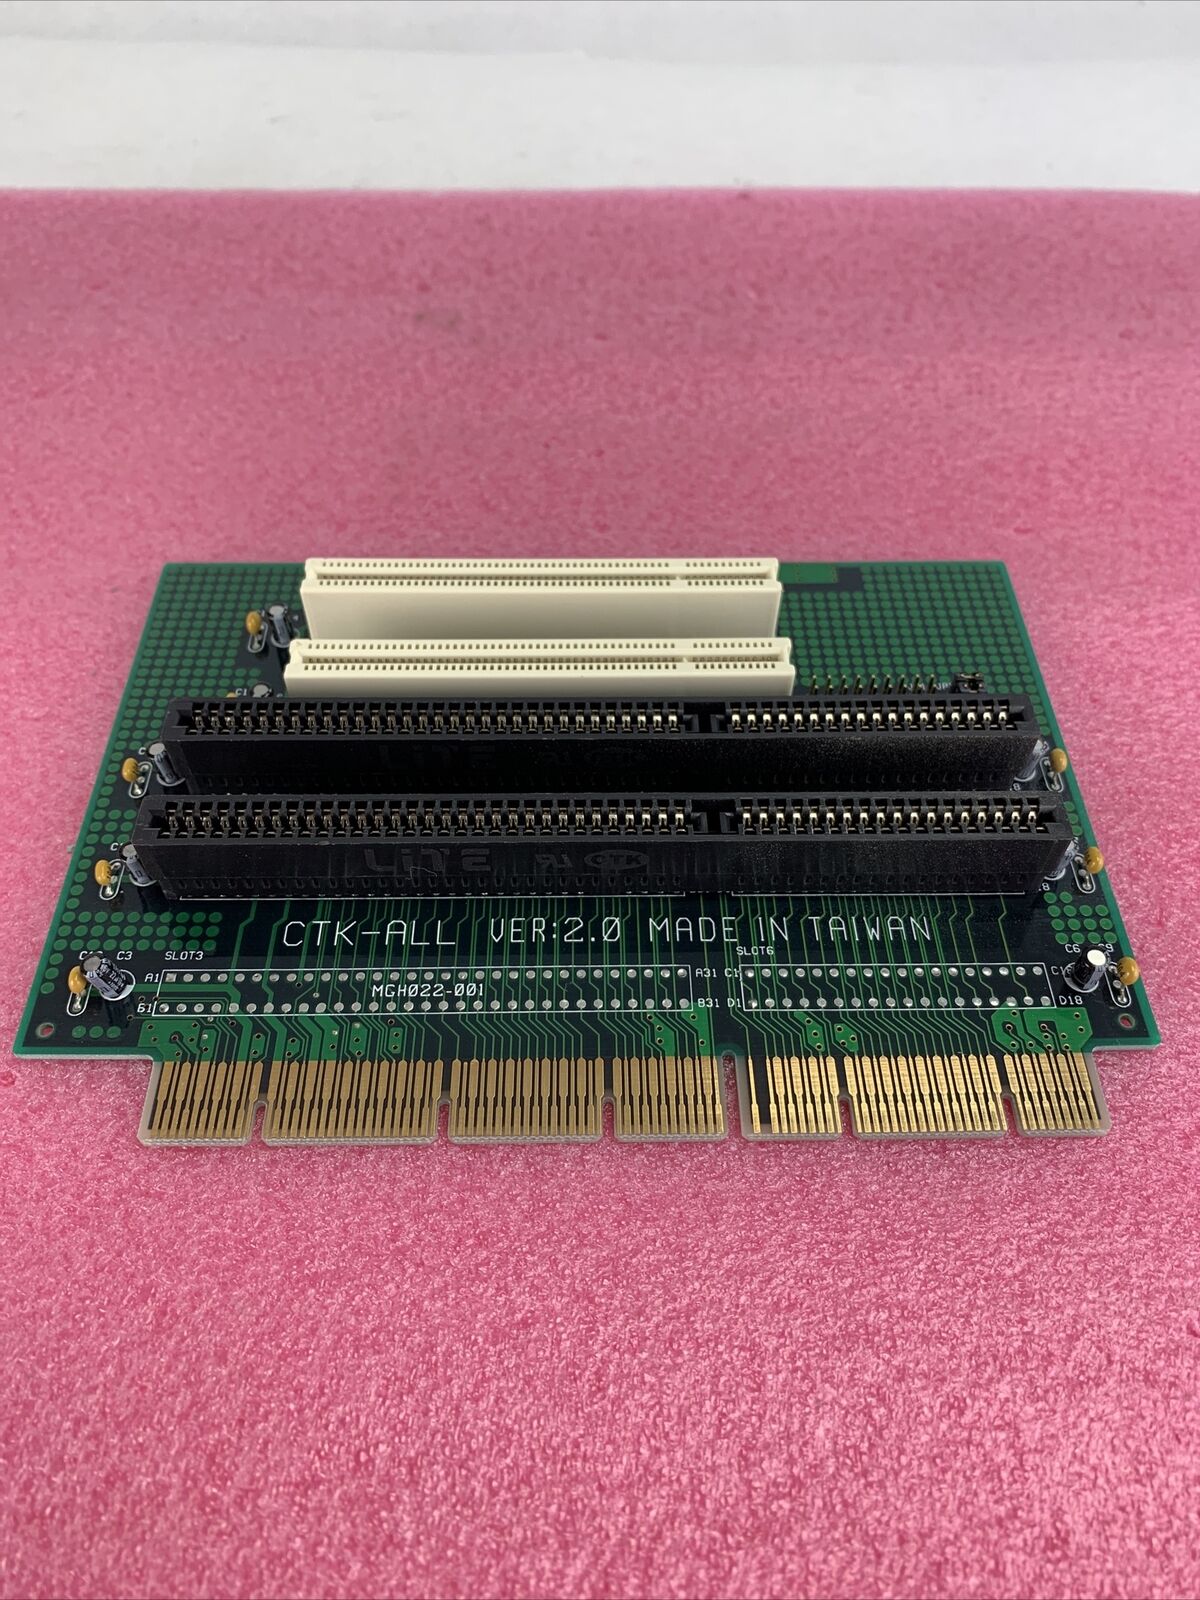 ACER CTK-ALL VER 2.0 2 ISA 2 PCI RISER CARD